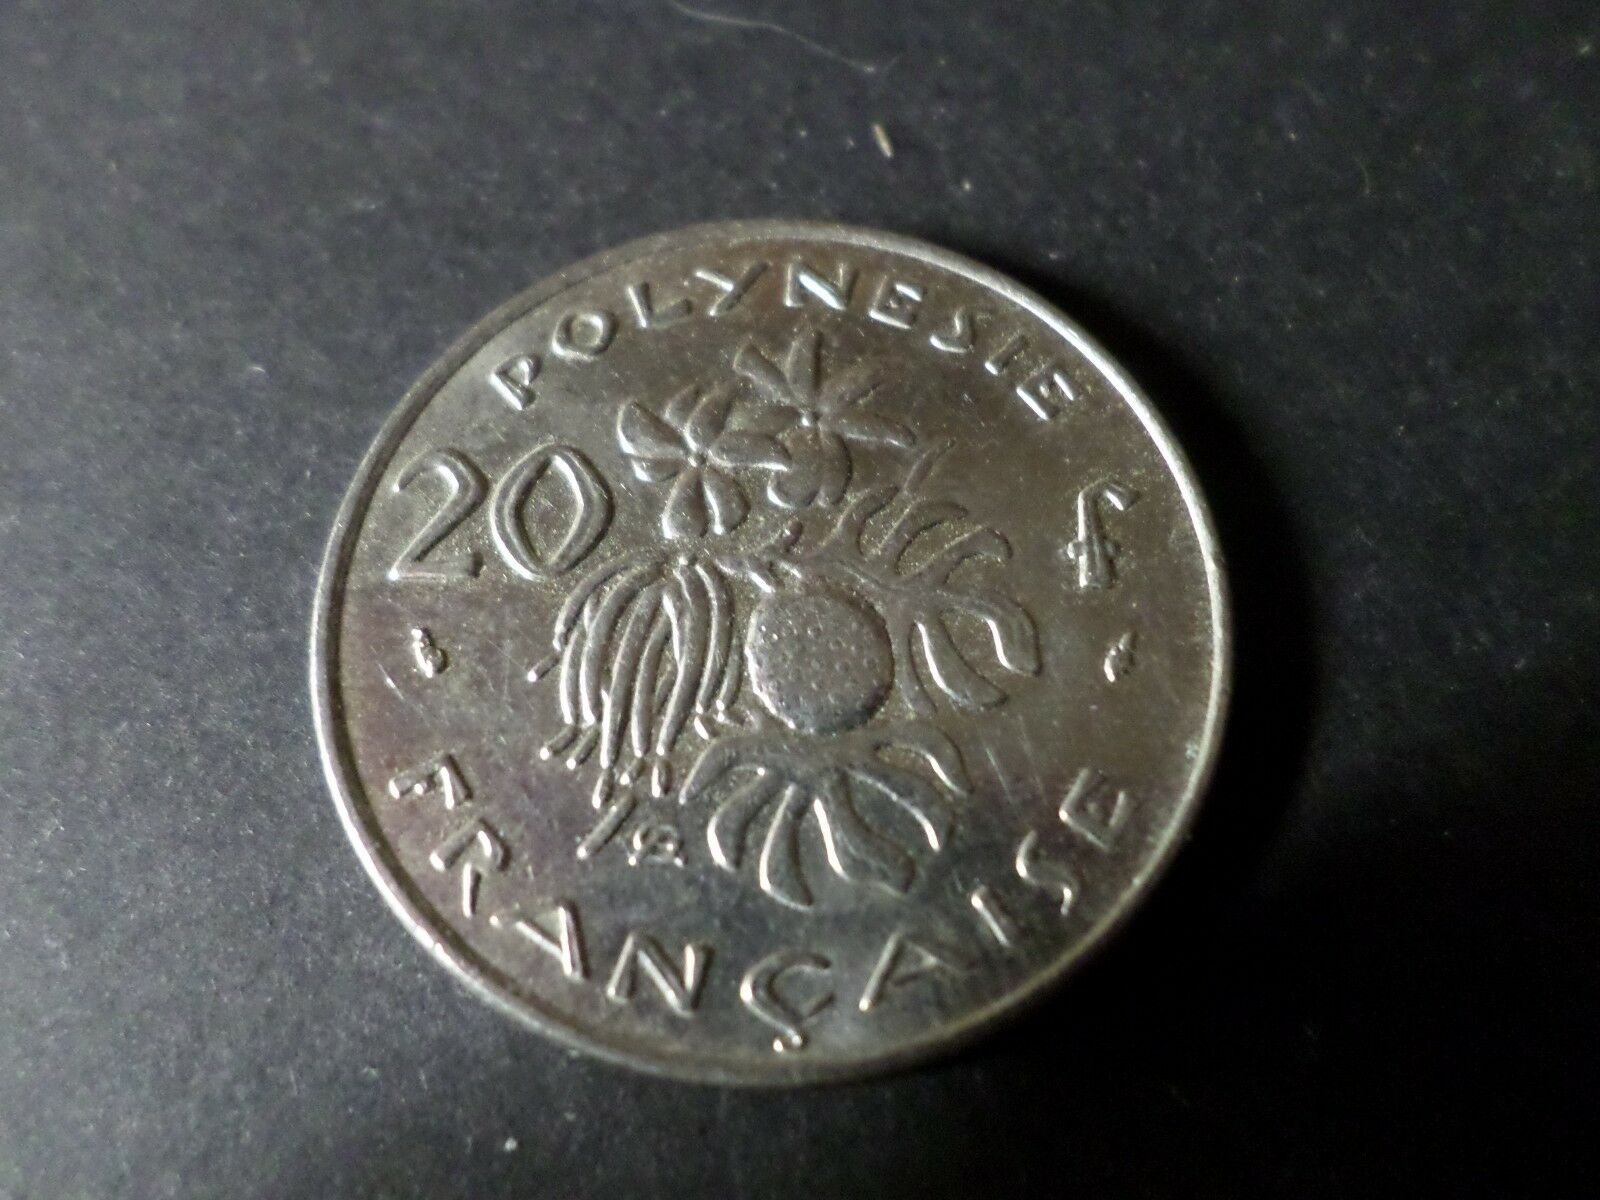 Polynesia Coin 20 Francs 1979, Very Good, VF Corner